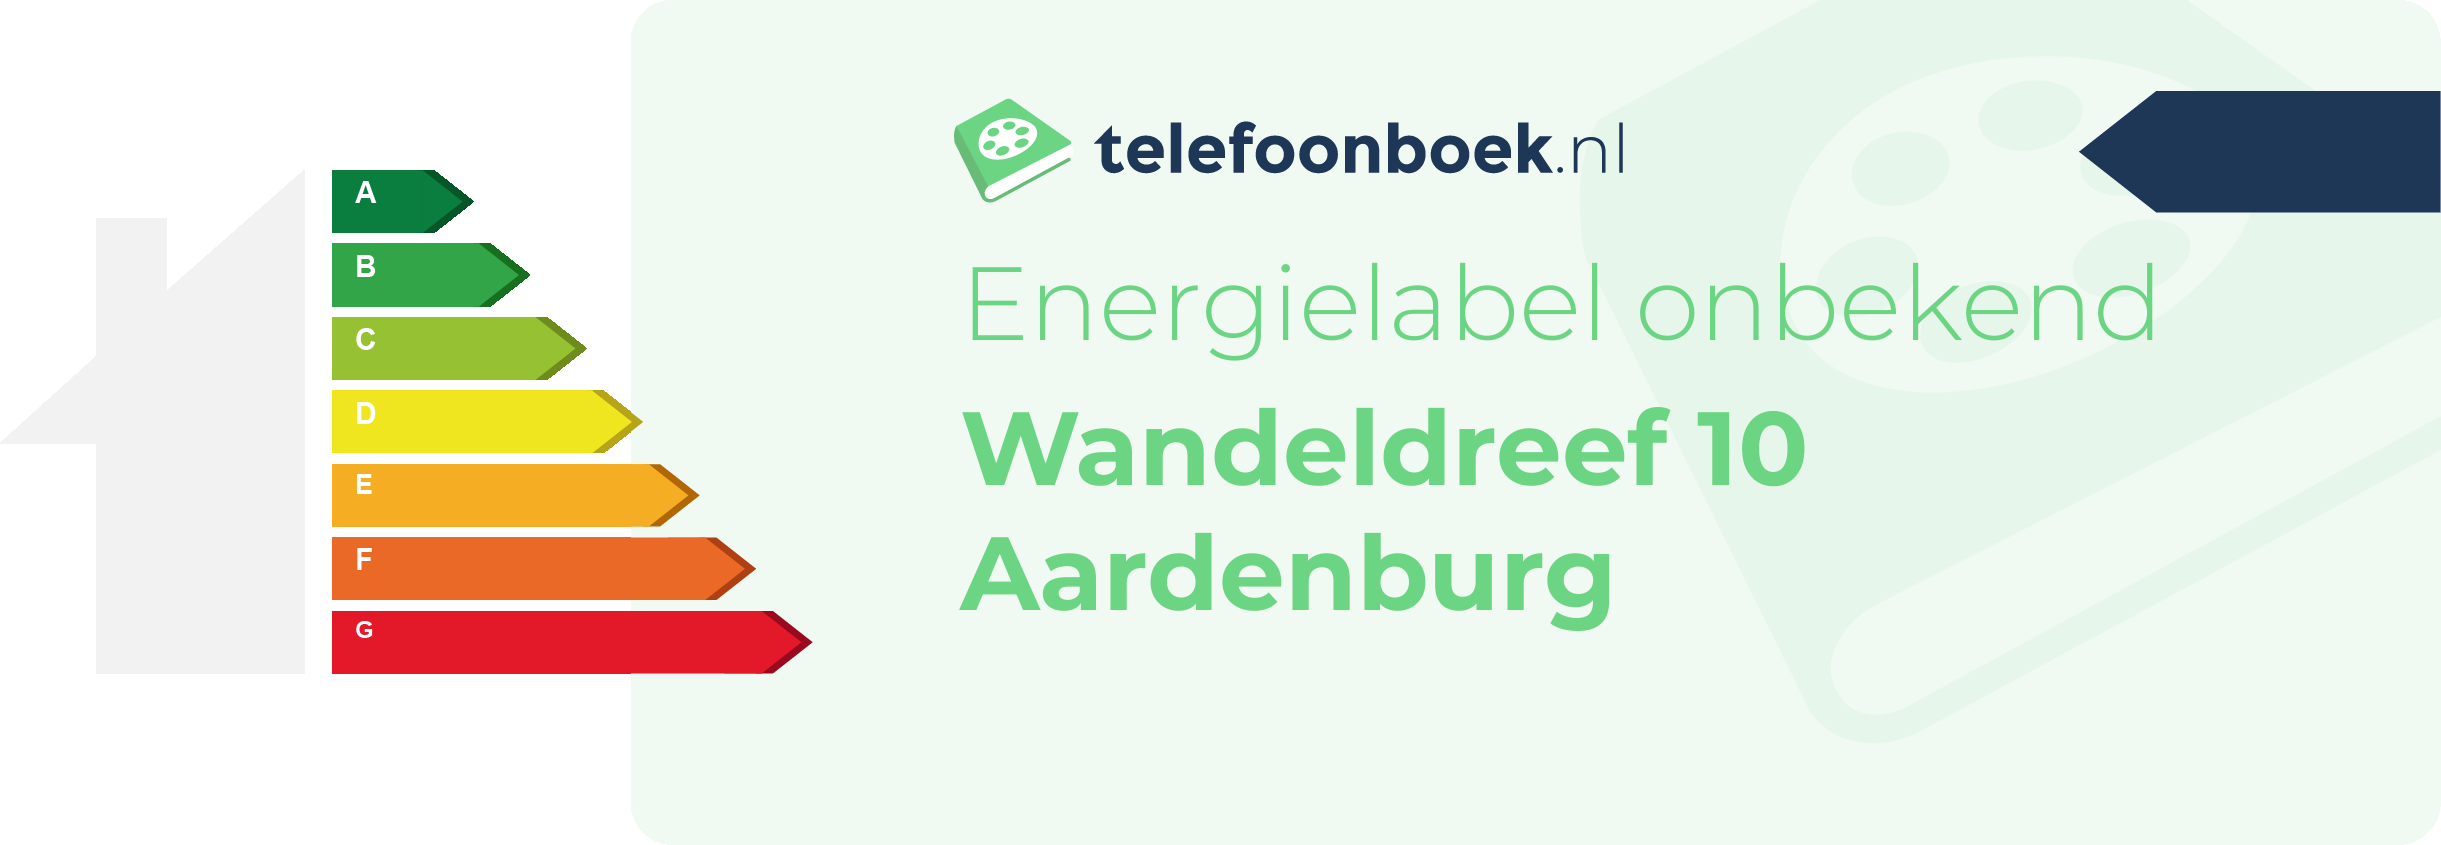 Energielabel Wandeldreef 10 Aardenburg